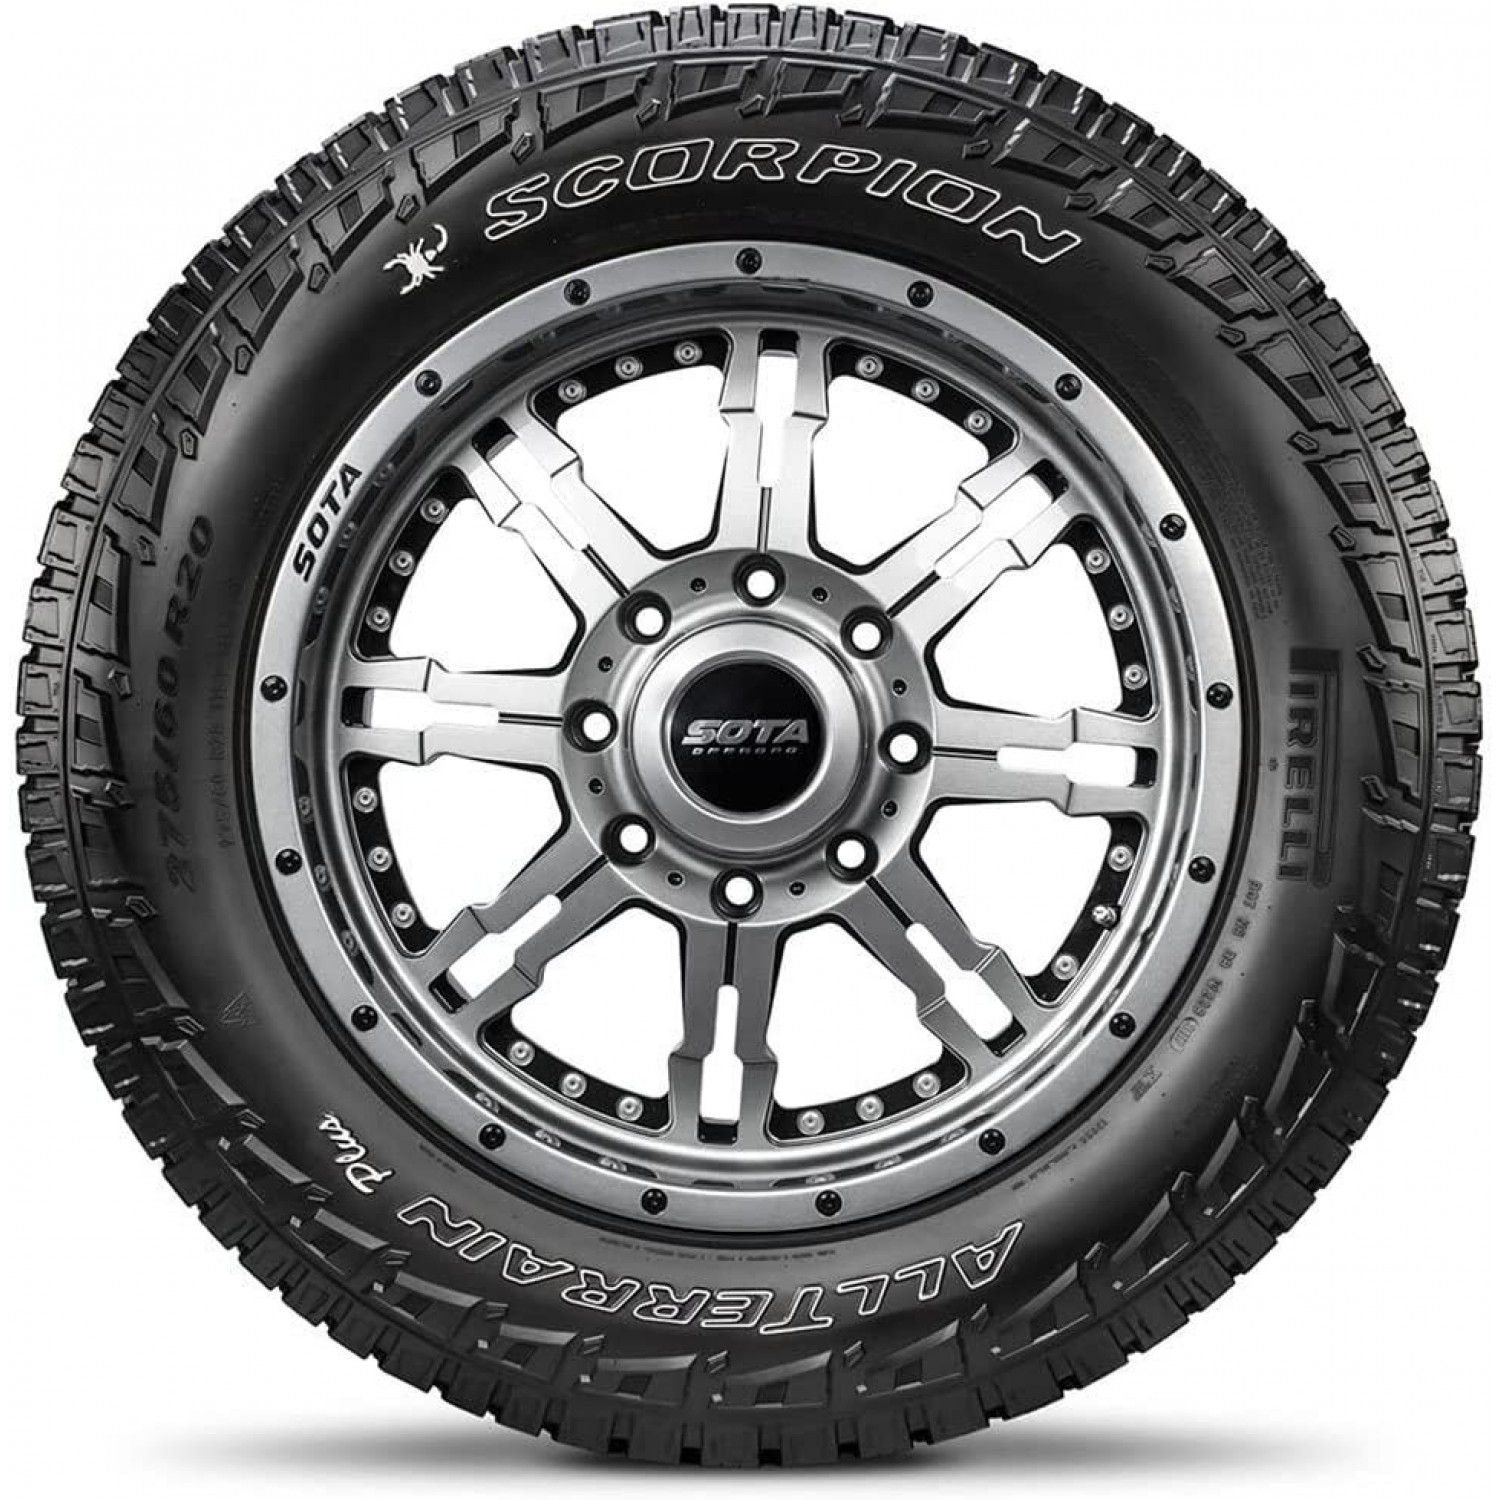 Pirelli Scorpion All Terrain Plus White Tire vzn121975 Raised 114T) Letters (265/65R18